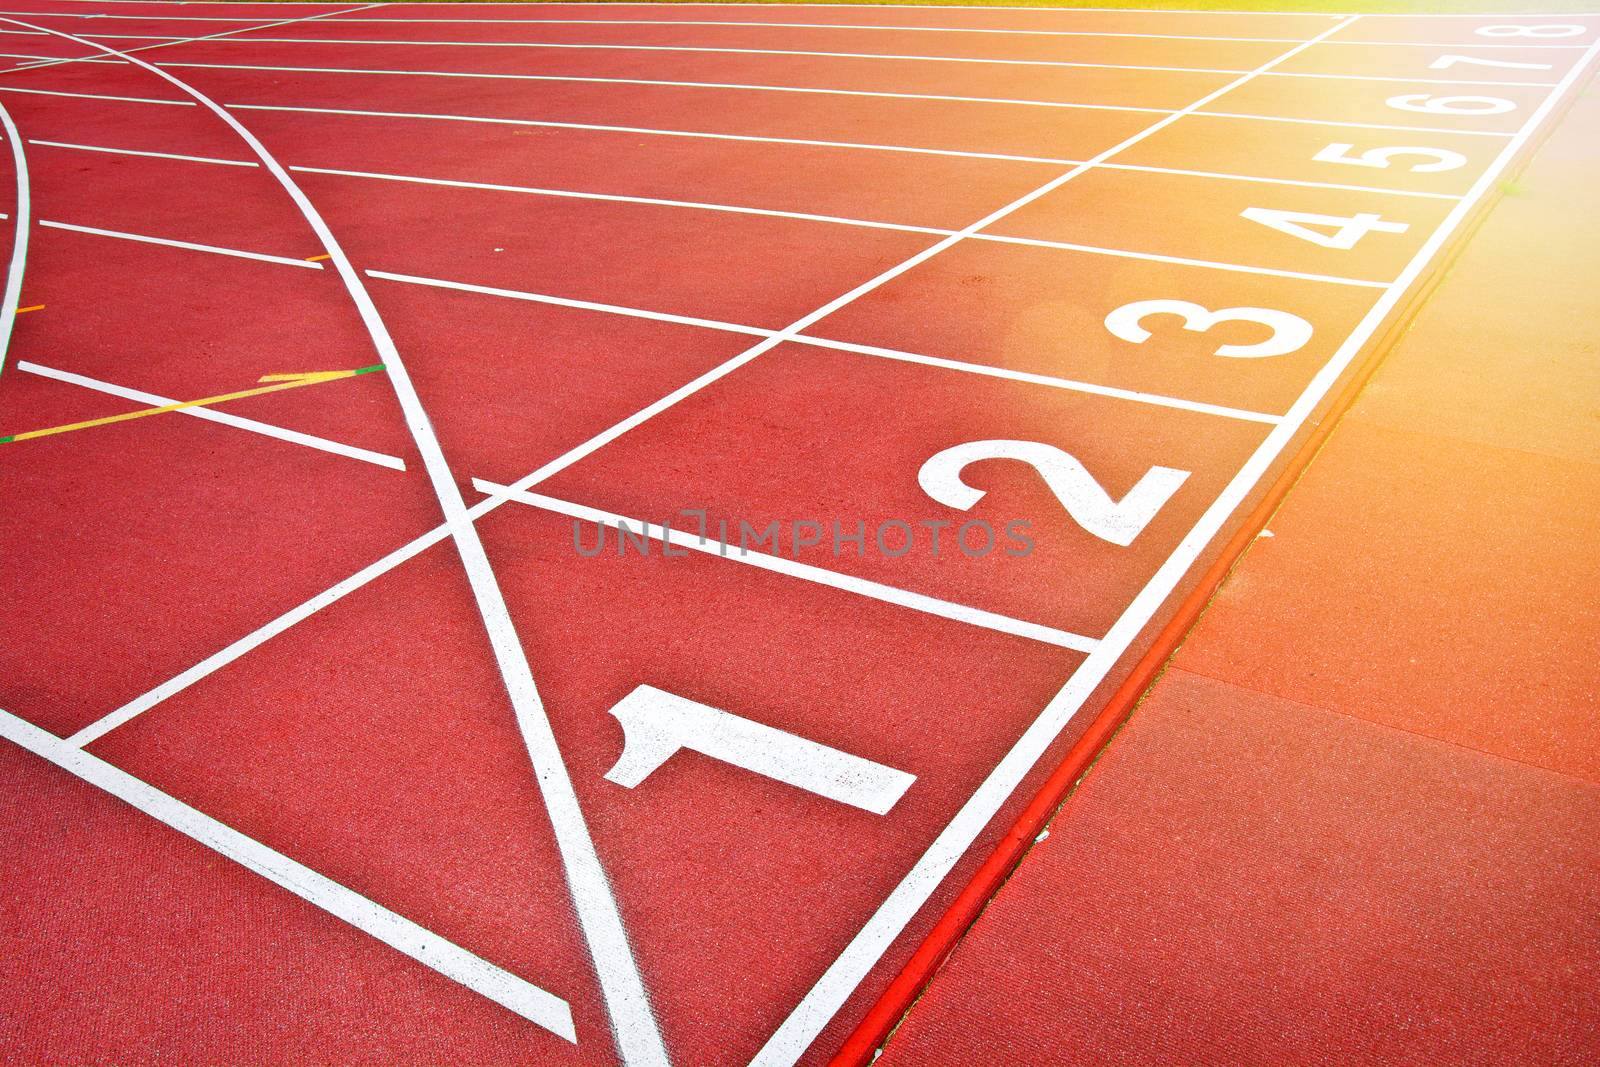 Athletics track pattern background. Sport conceptual image.